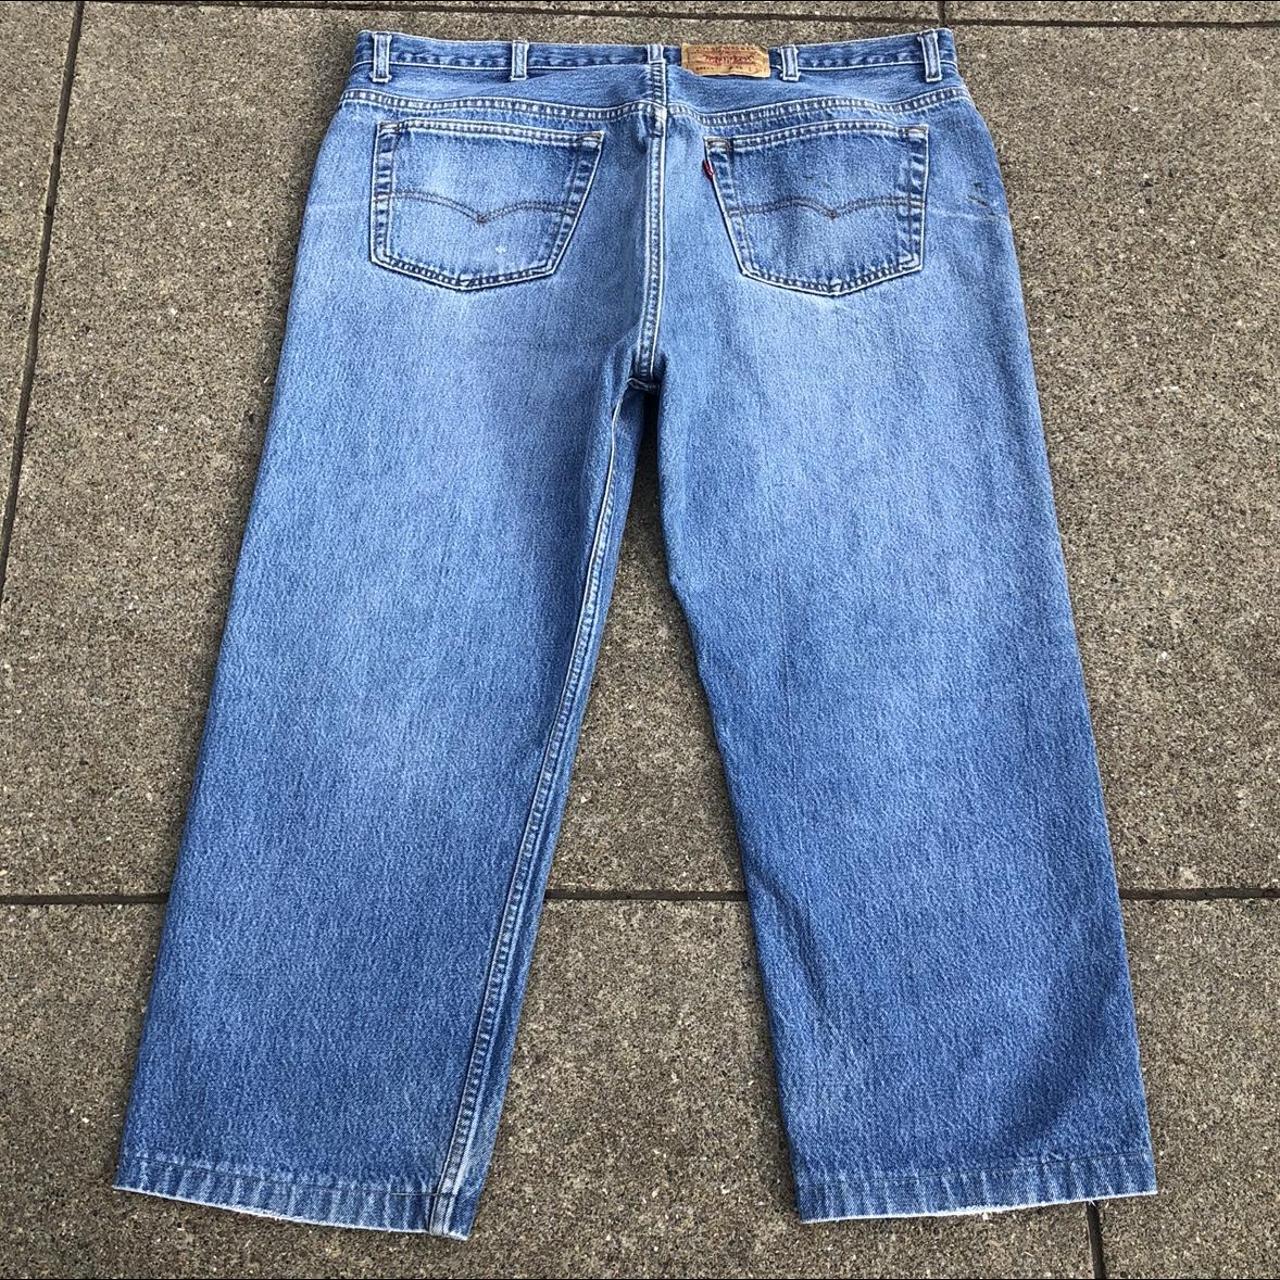 Vintage 80s Levi’s 501 jeans size (measured) 42 X 26... - Depop